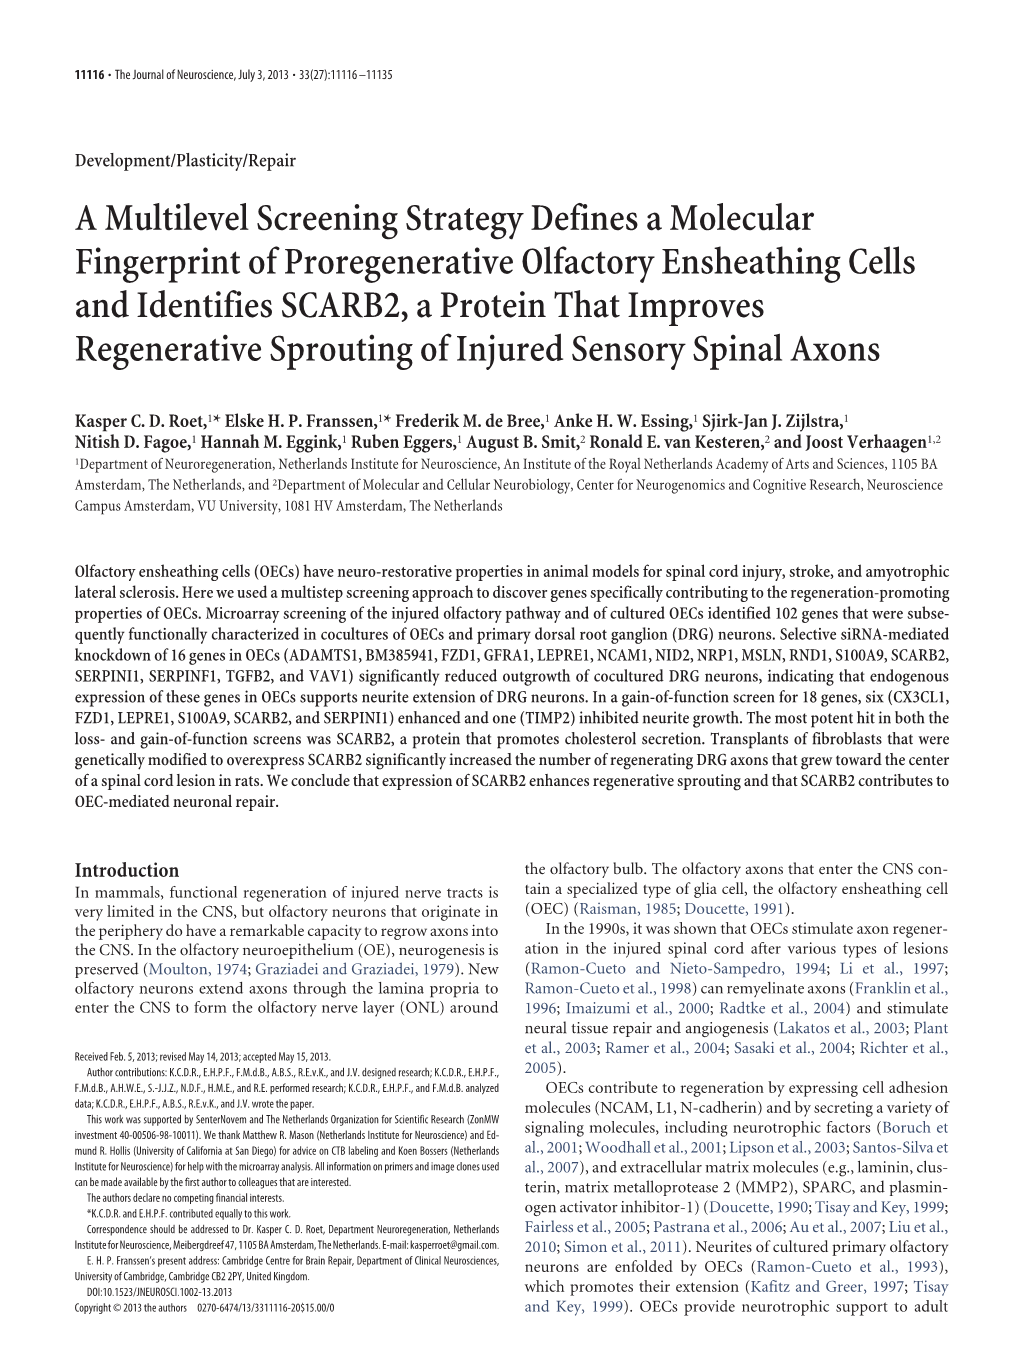 A Multilevel Screening Strategy Defines a Molecular Fingerprint Of